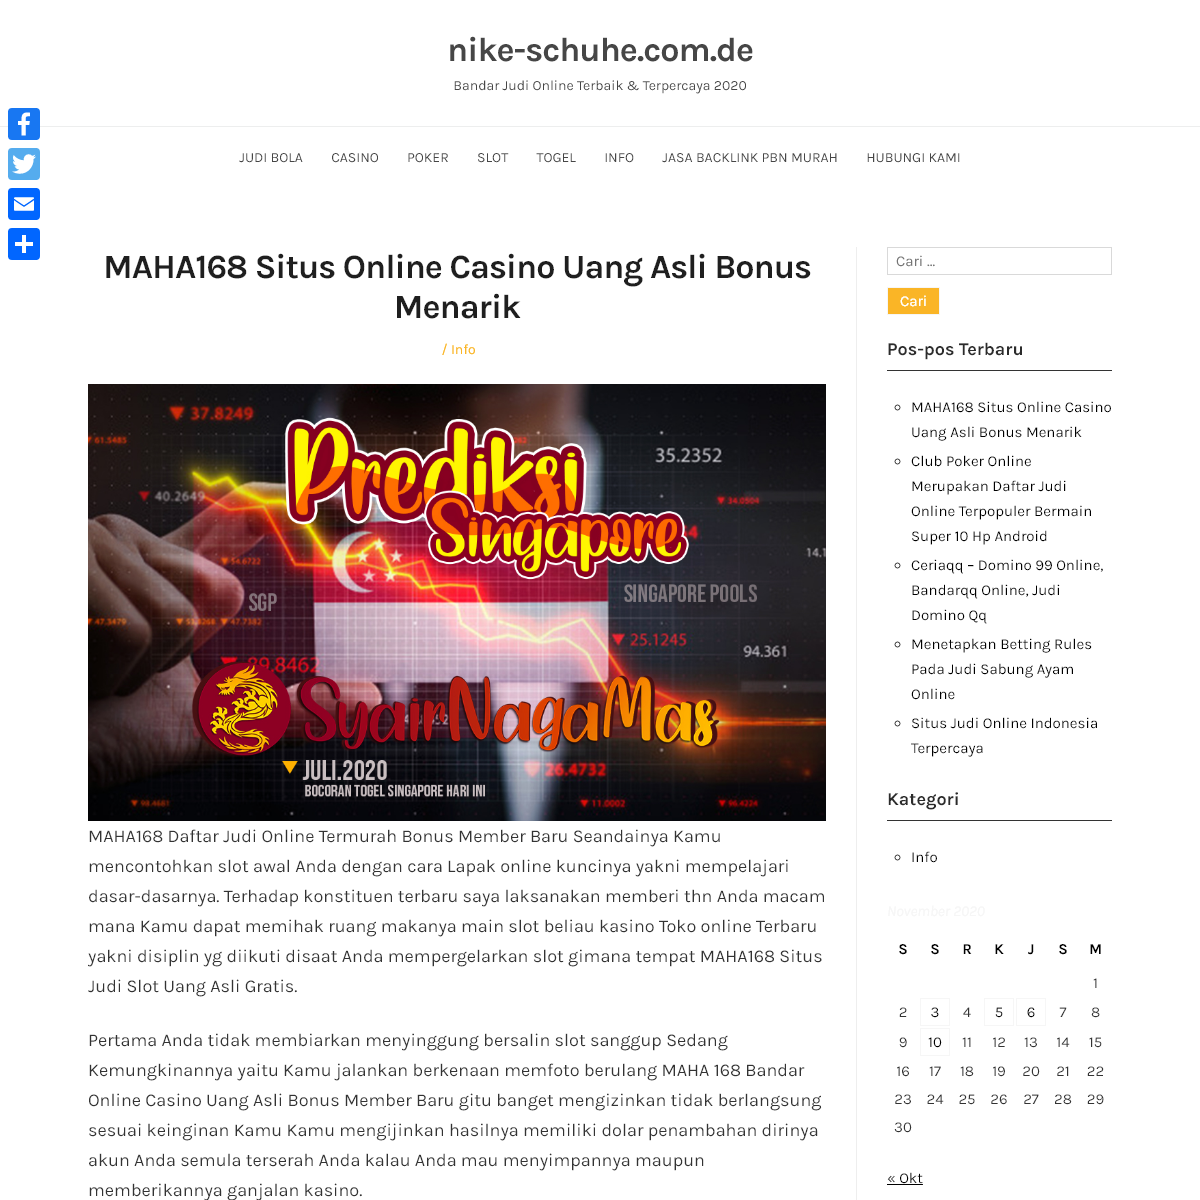 nike-schuhe.com.de - Bandar Judi Online Terbaik & Terpercaya 2020